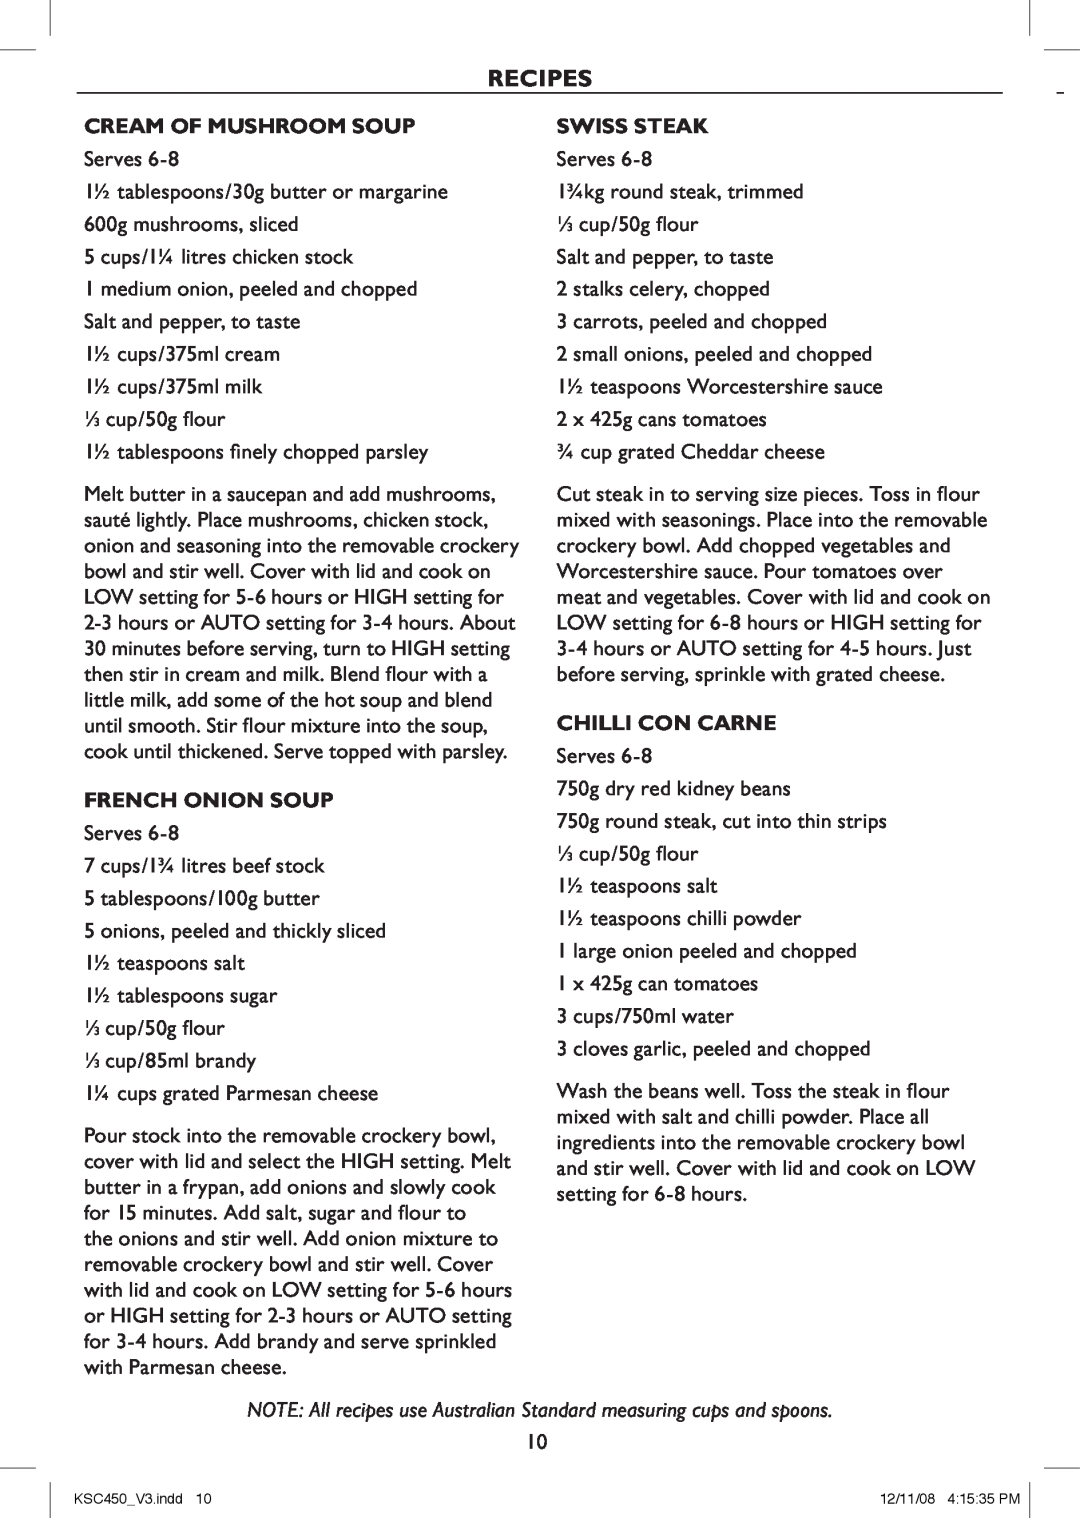 Kambrook KSC450 manual Recipes, Cream Of Mushroom Soup, French Onion Soup, Swiss Steak, Chilli Con Carne 